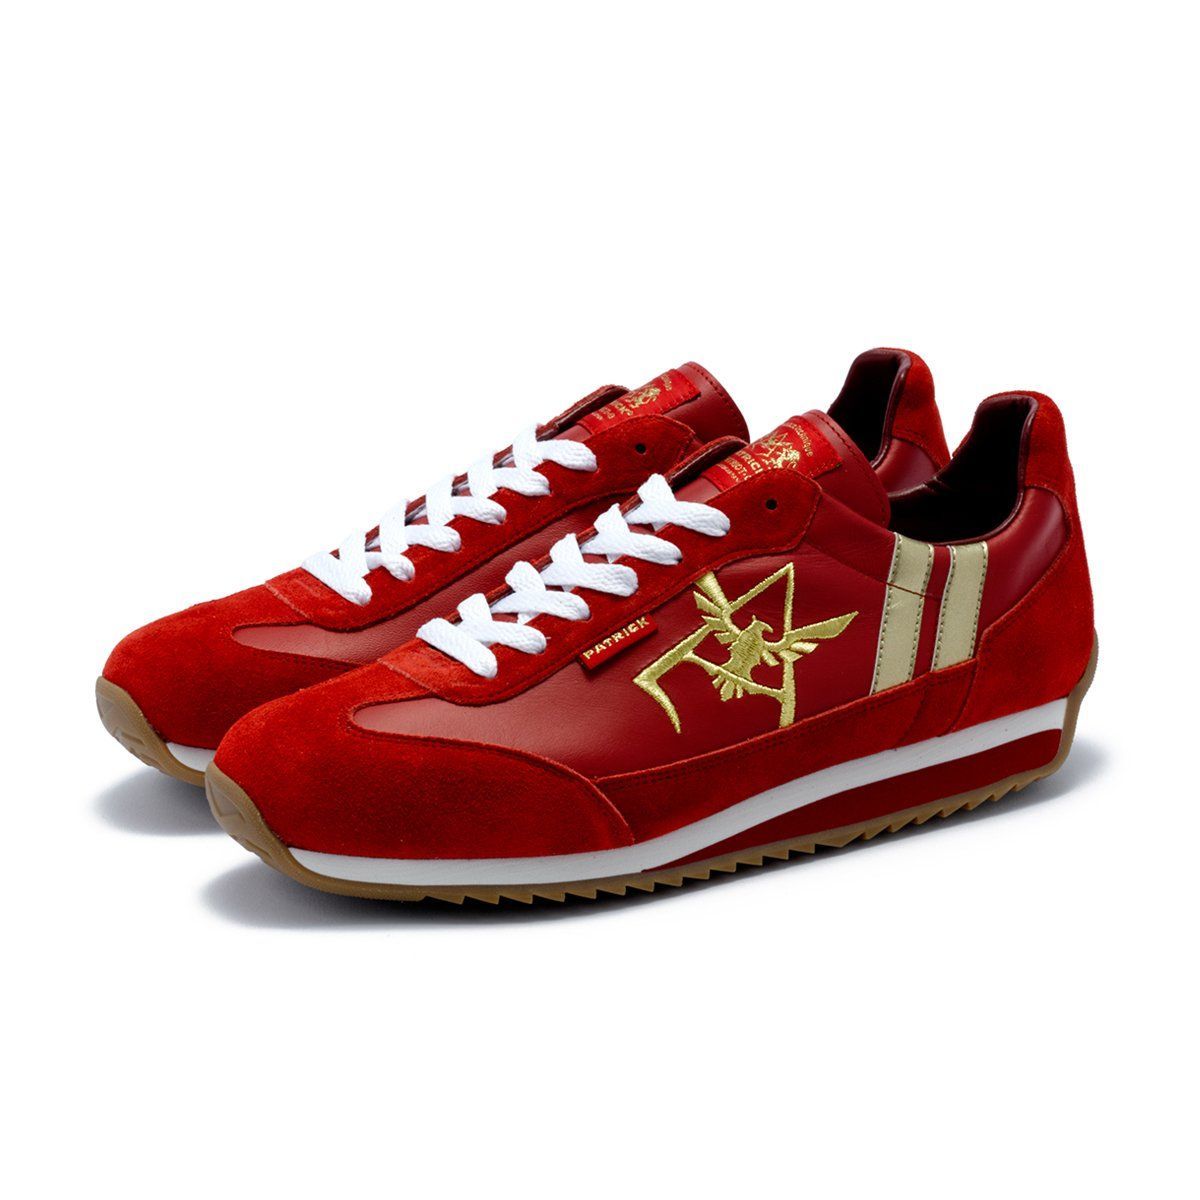 Strict-G×Patrick Mobile Suit Gundam Marathon·Leather Sneakers(Red Comet Model)